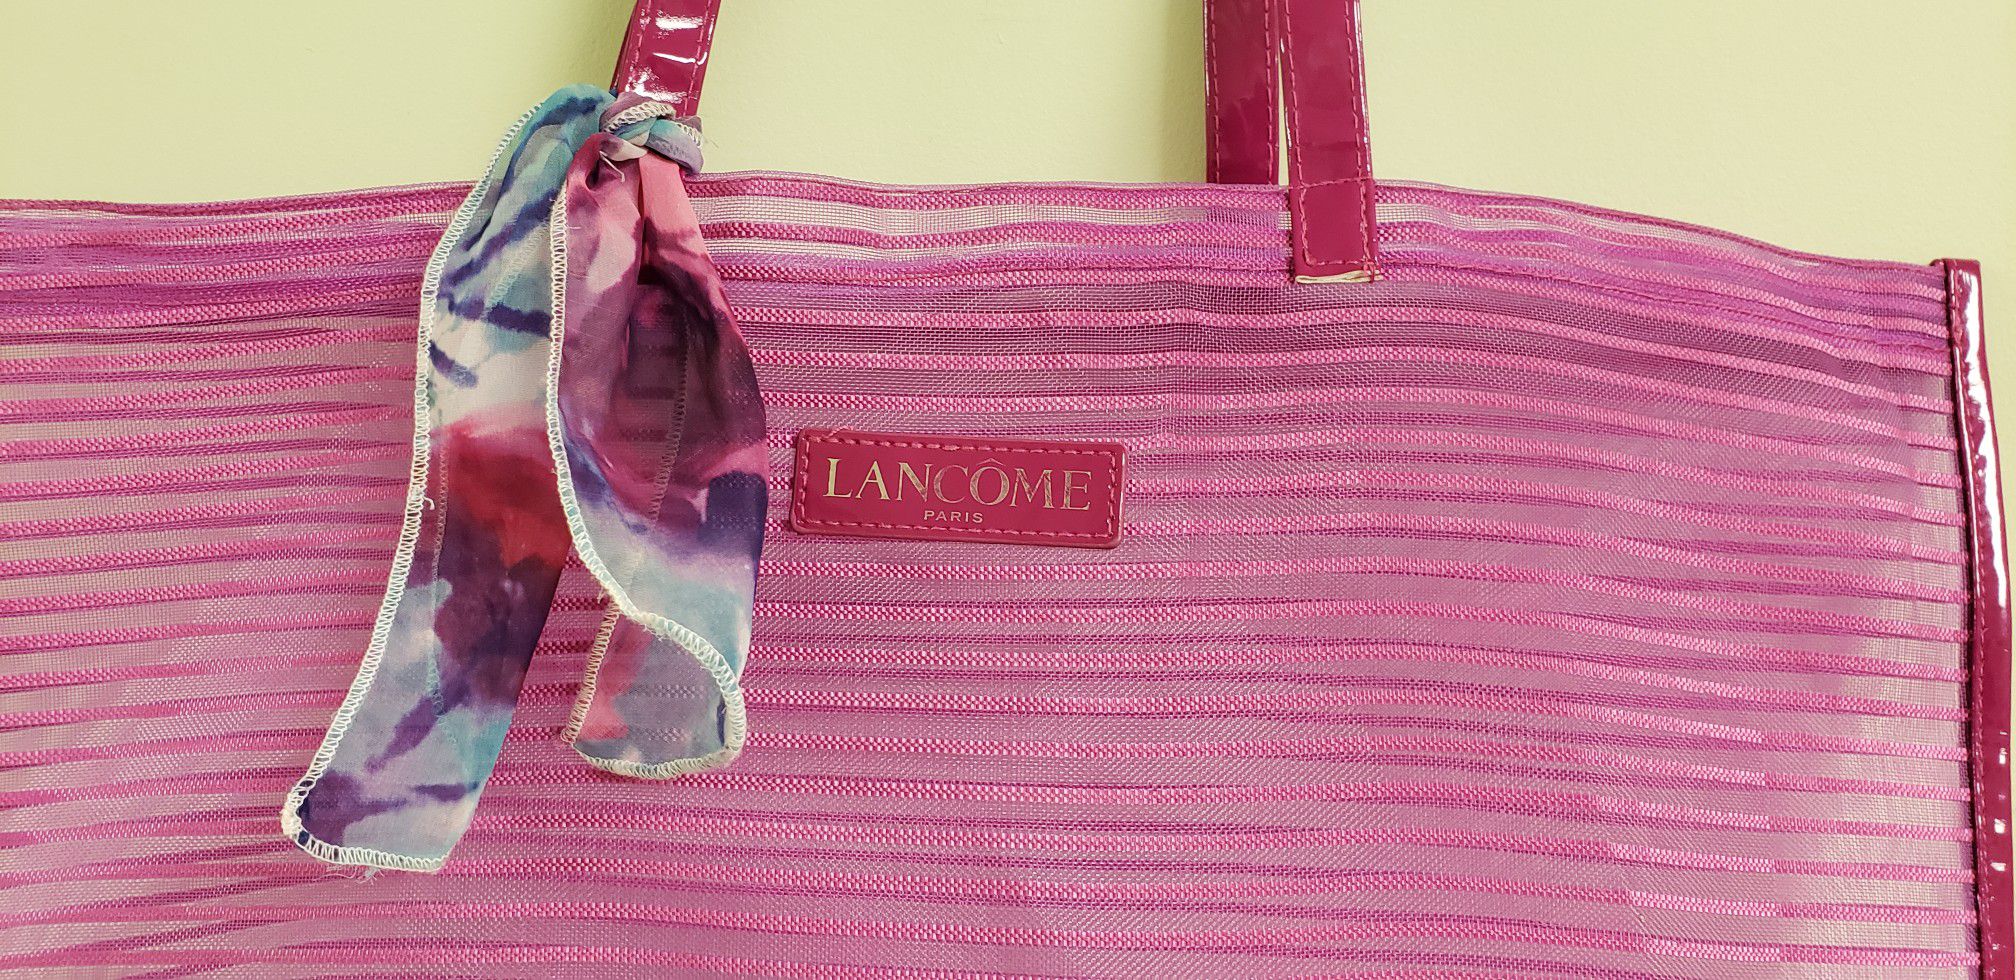 Lancome Tote Bag Purse